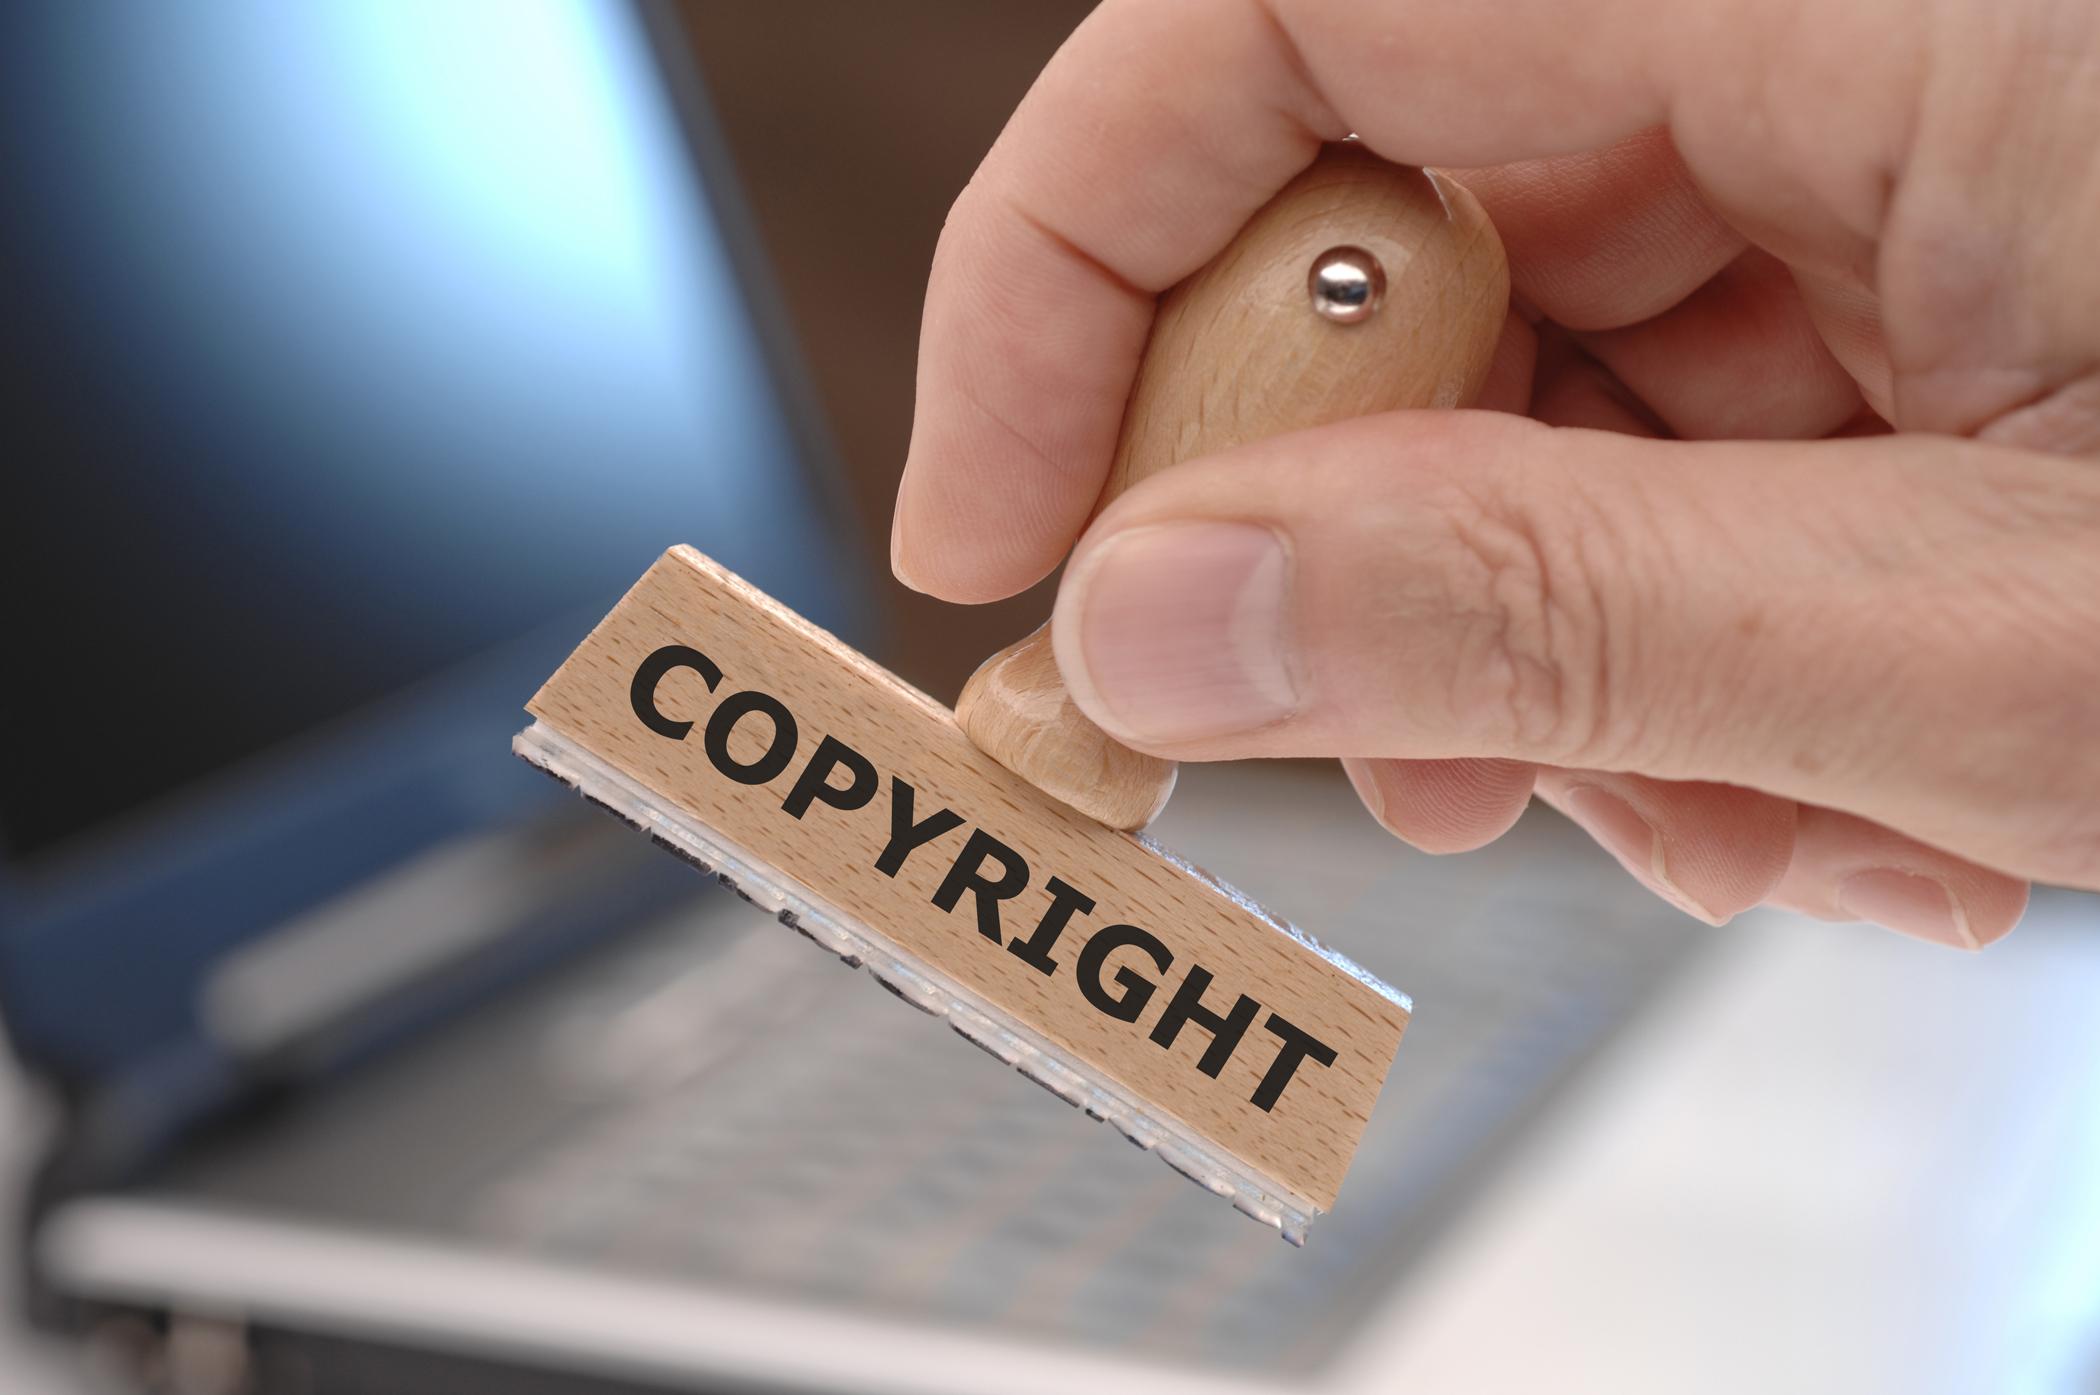 Как обойти авторские права на Ютубе